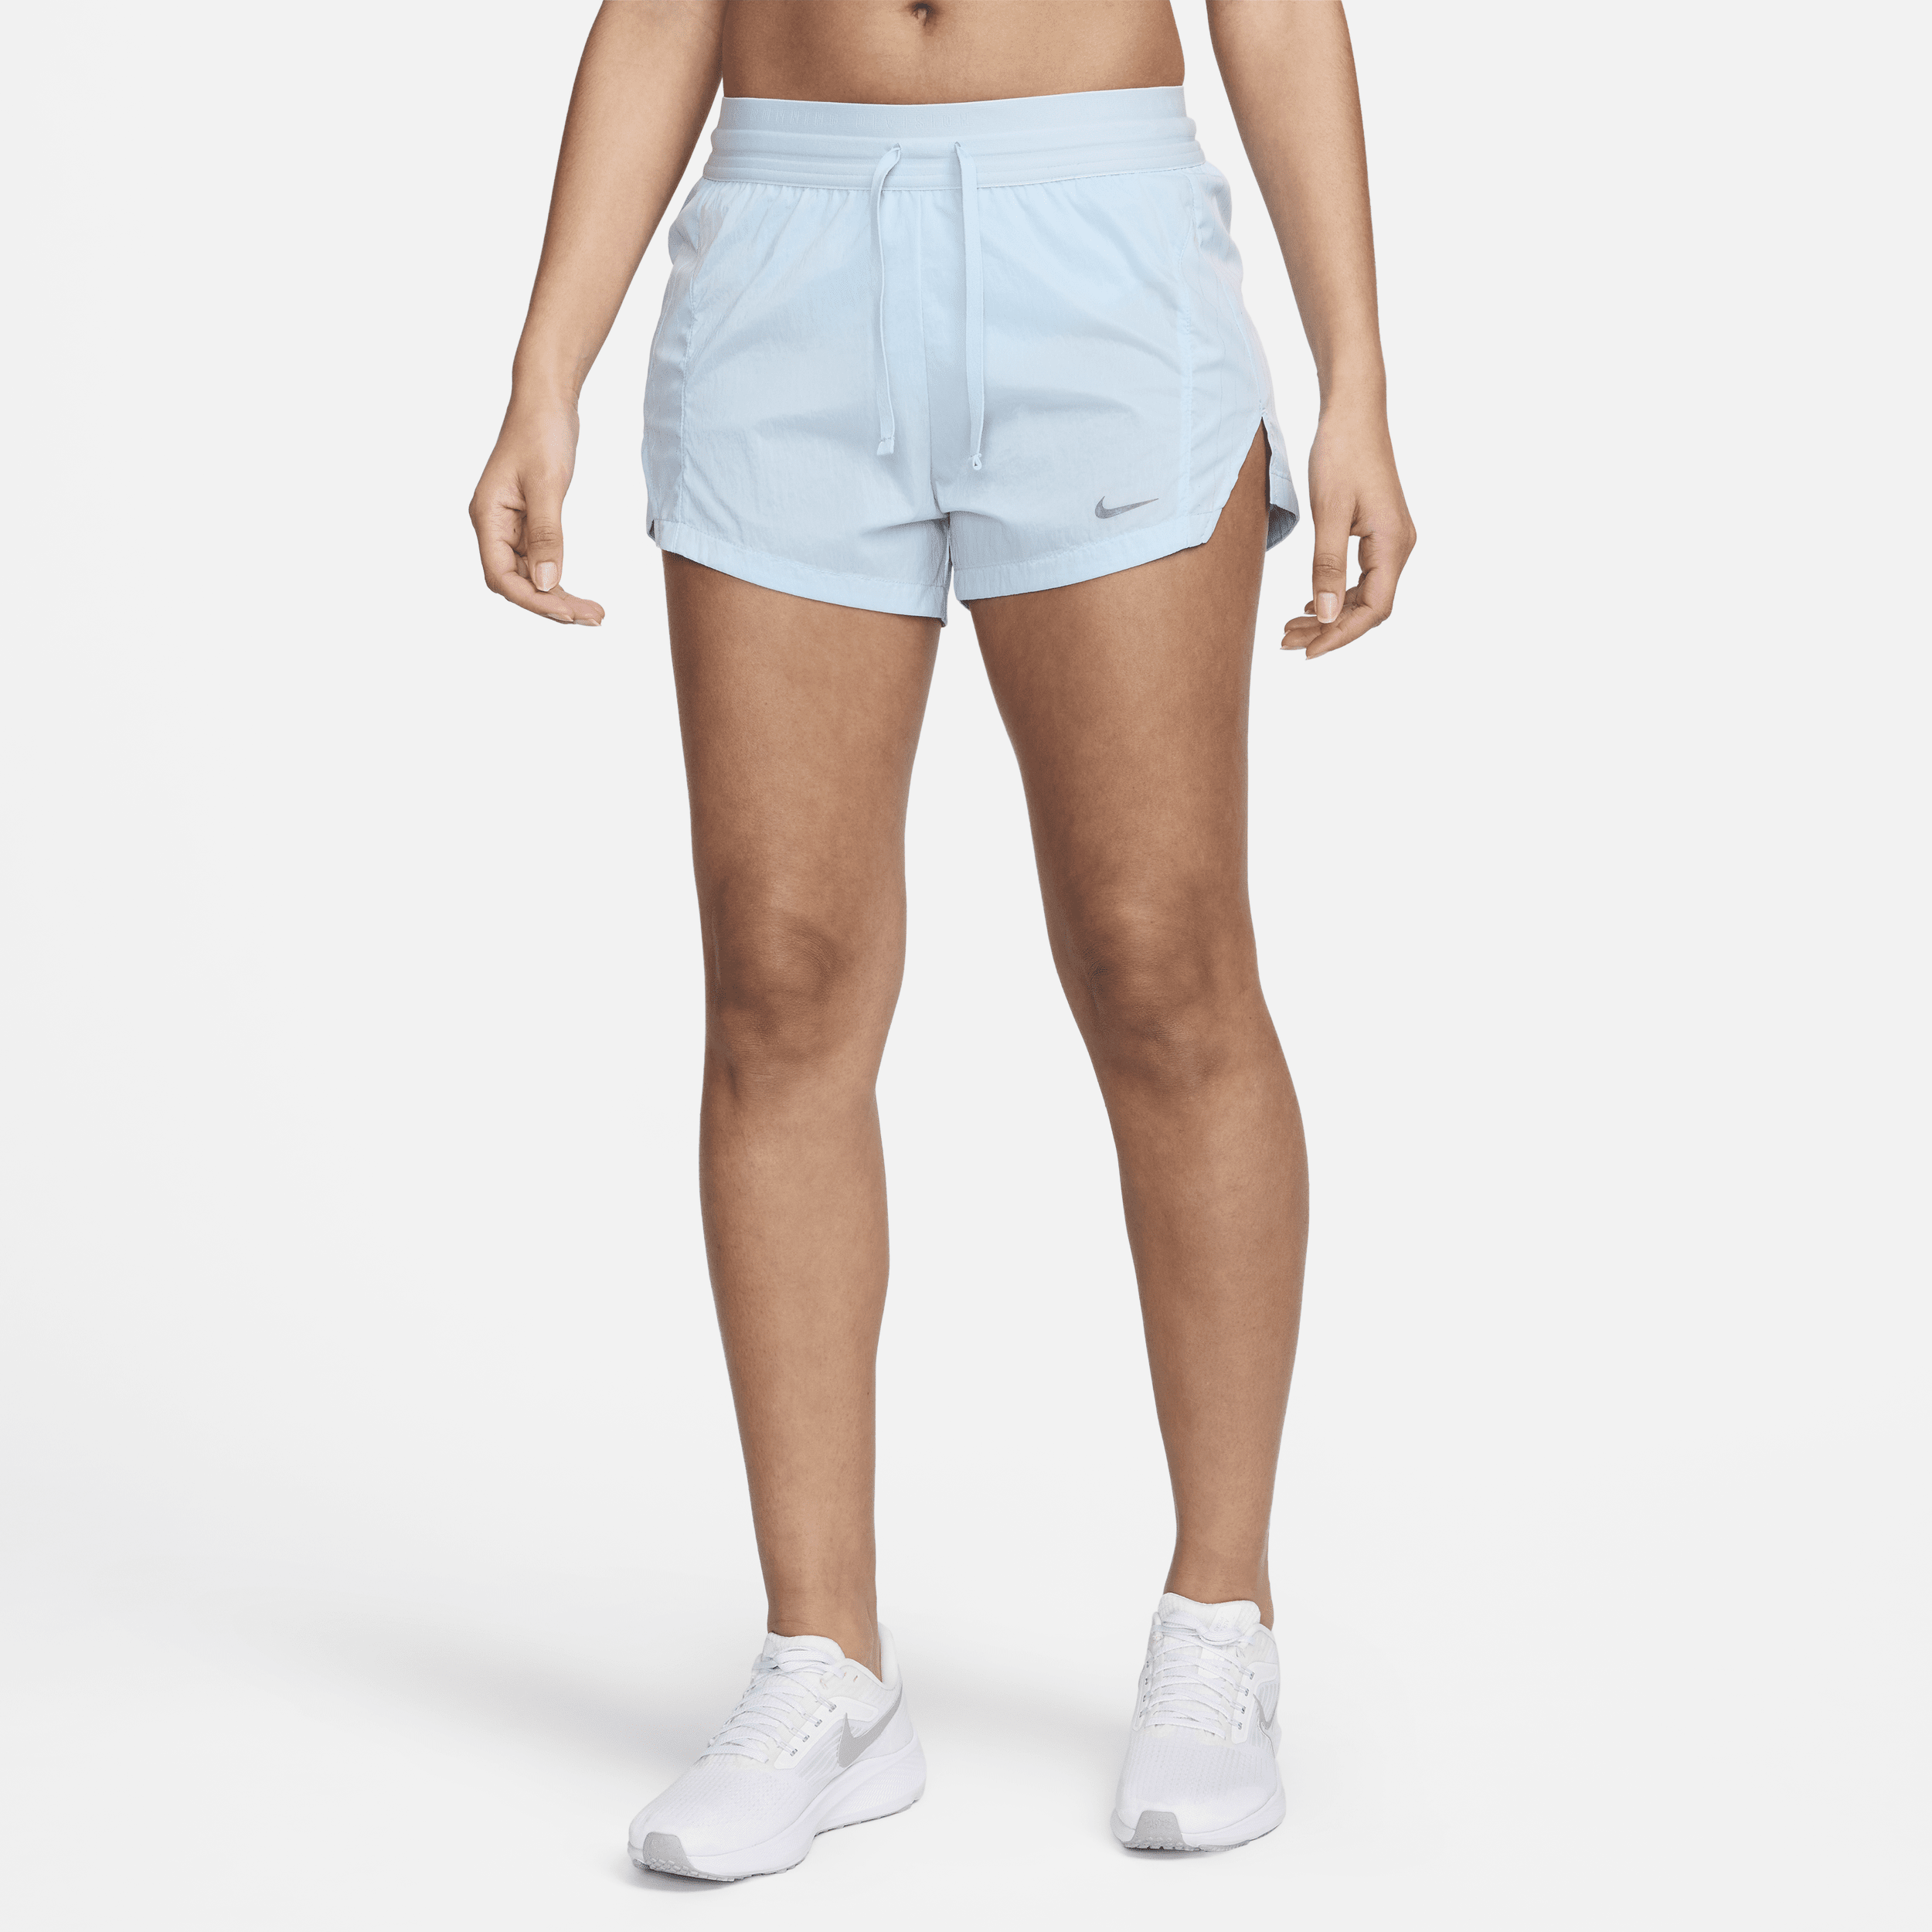 Nike Running Division hardloopshorts met halfhoge taille en binnenbroekje voor dames (8 cm) Blauw